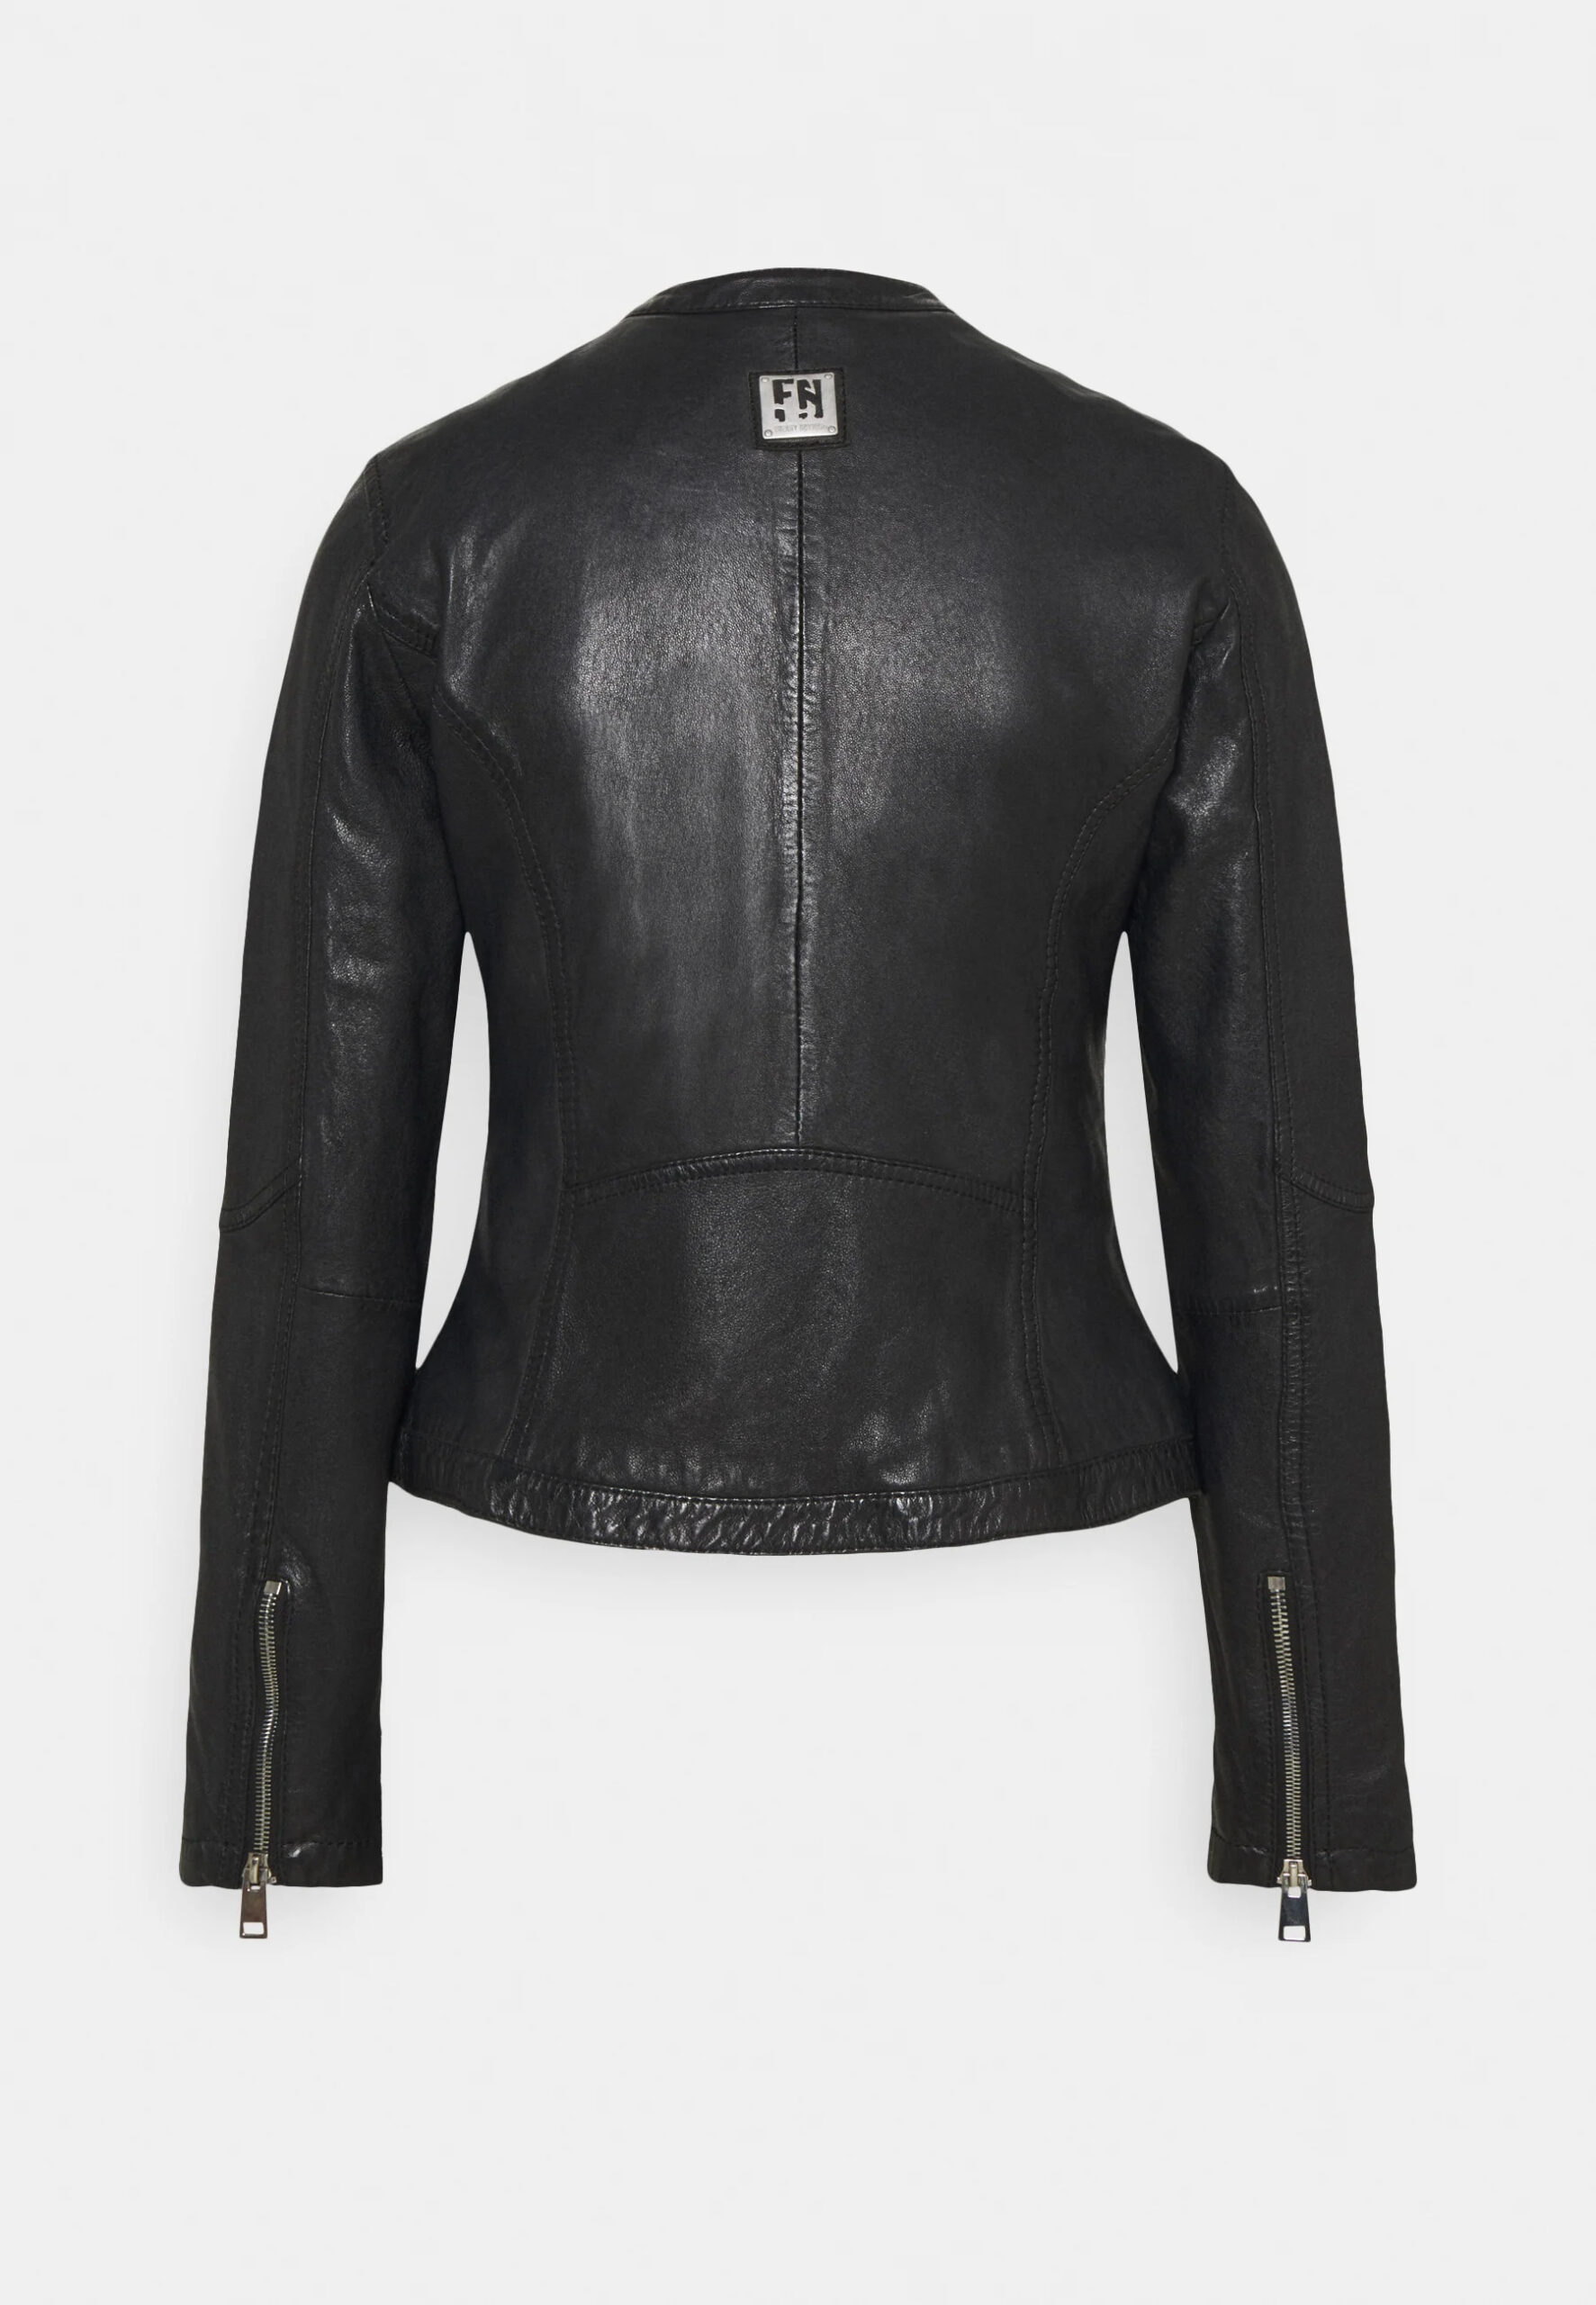 emma-black-cafe-racer-leather-jacket-genuine-lambskin-leather (5)